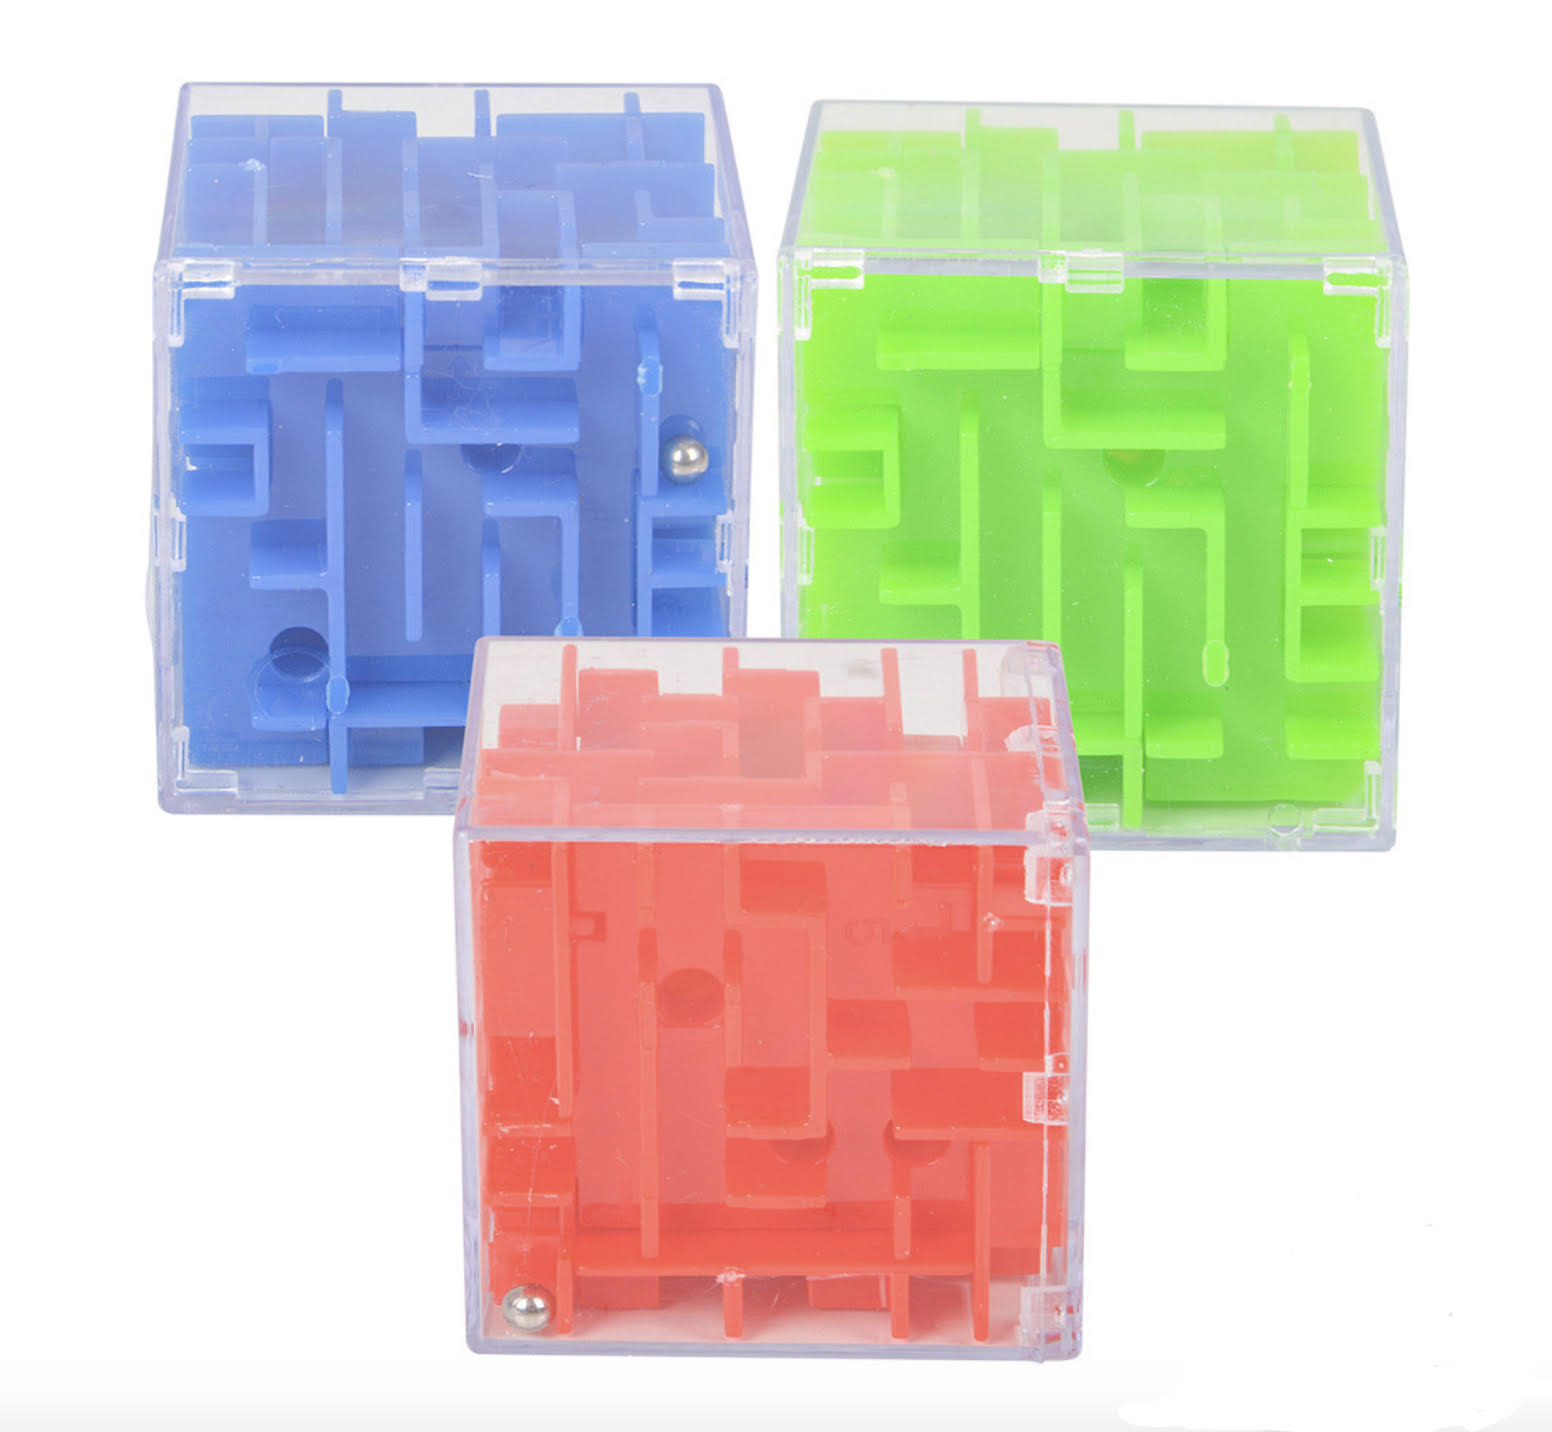 TR906748 Puzzle Cube Game